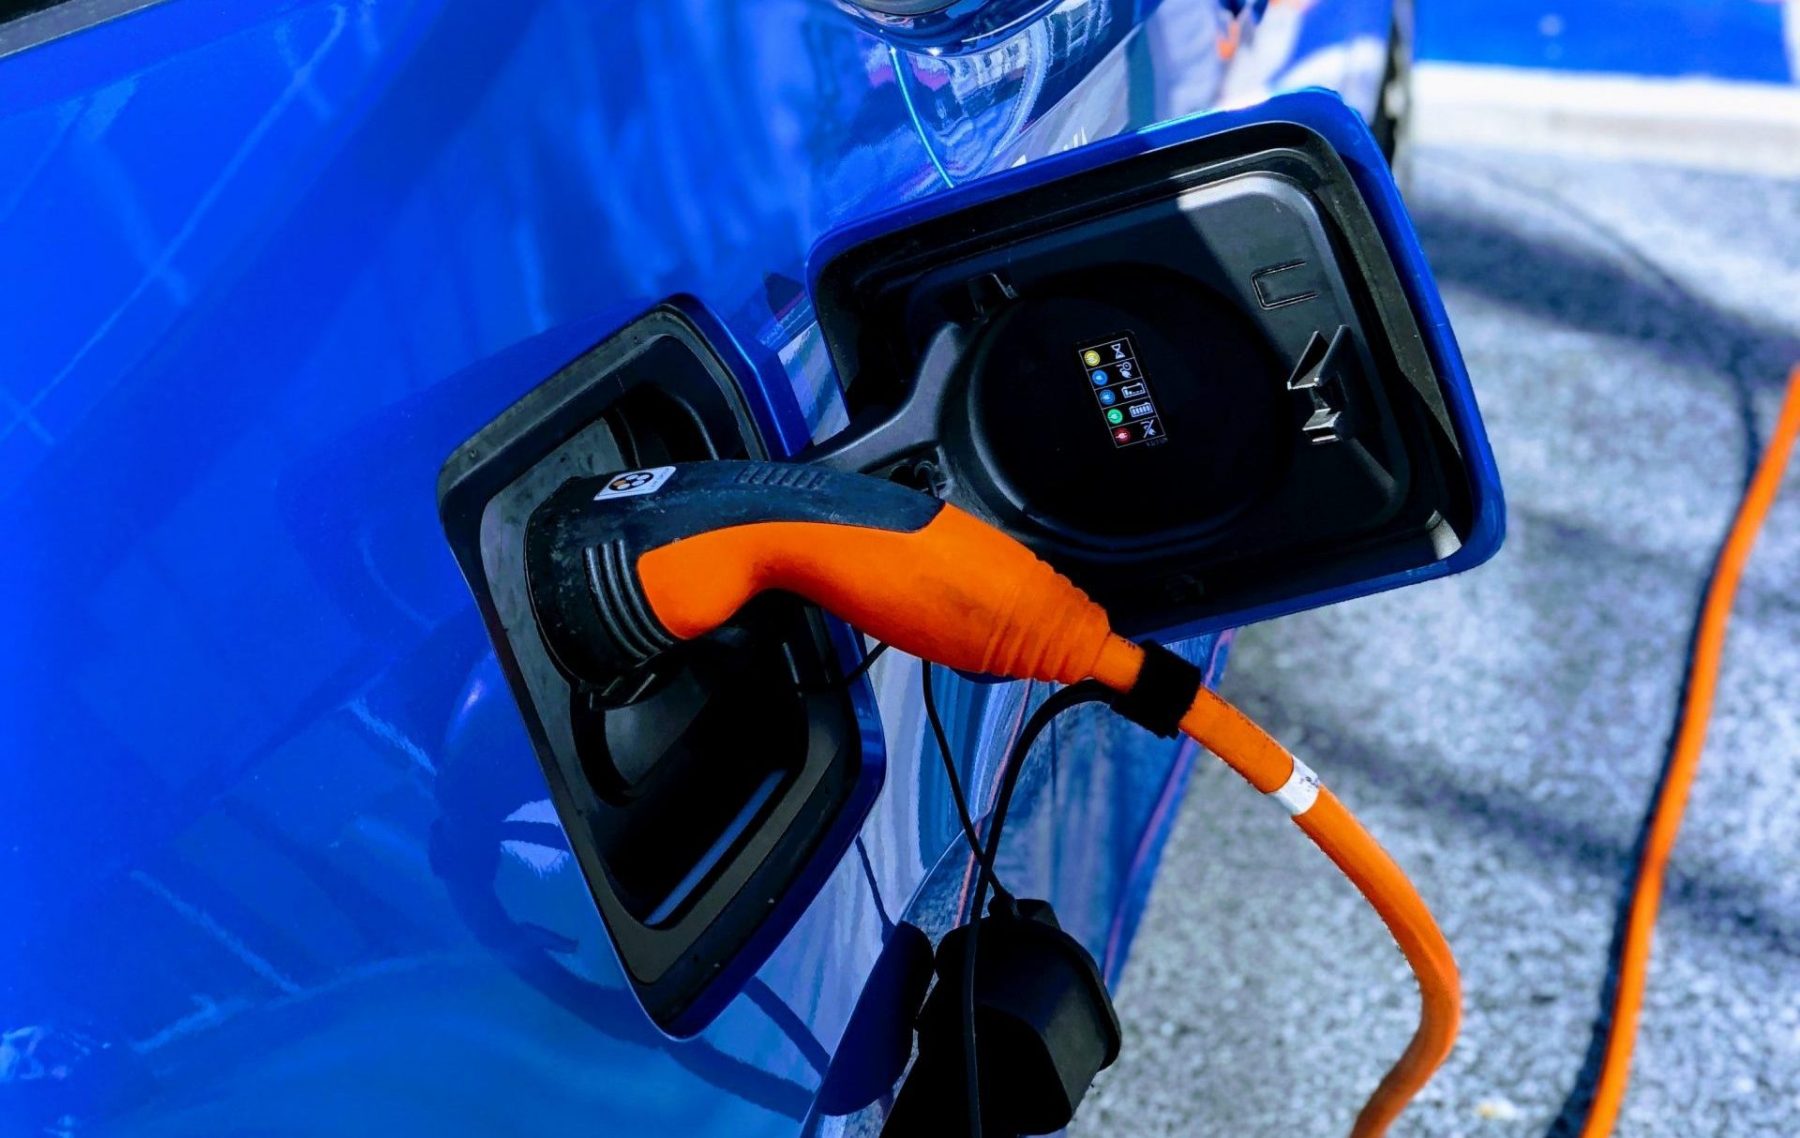 Smart demand vehicle charging solution